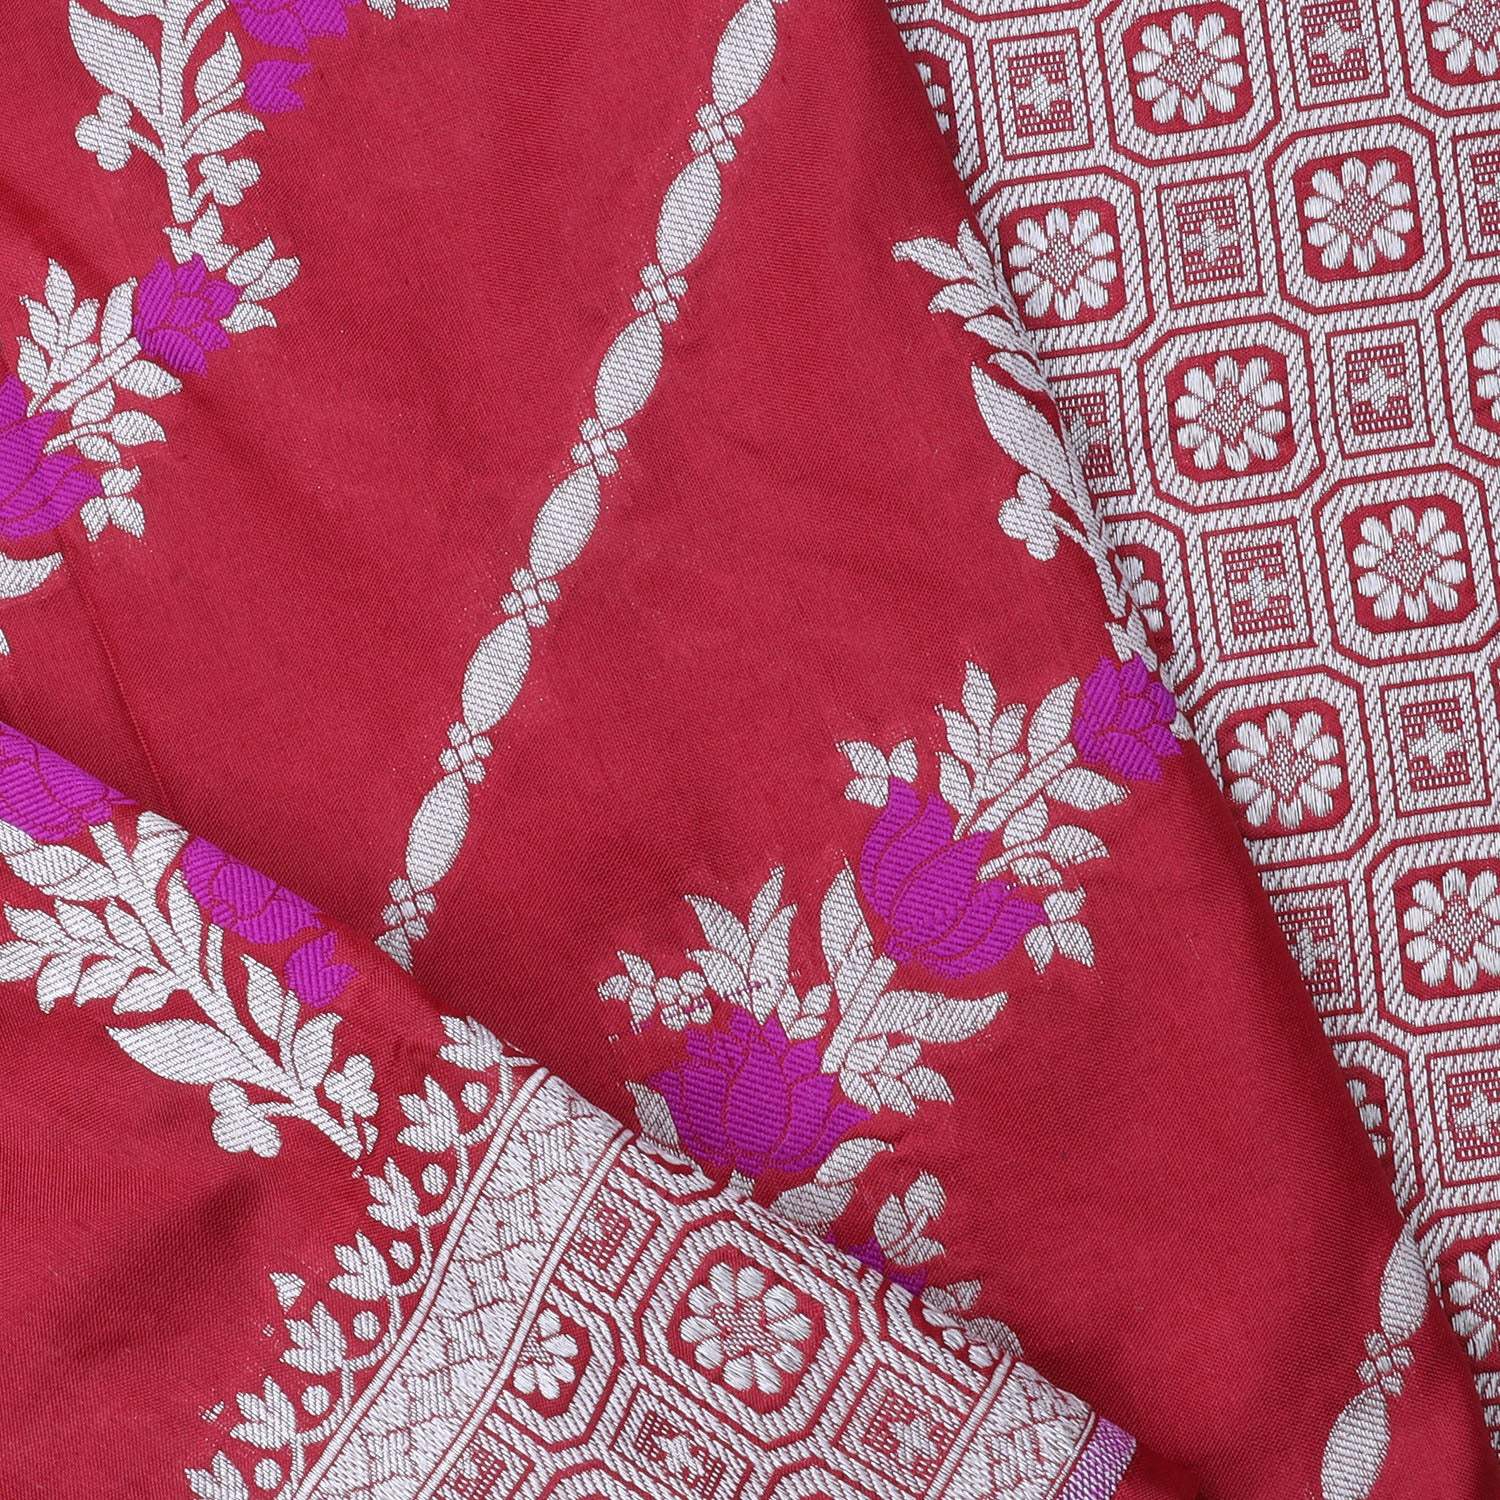 Deep Red Banarasi Silk Handloom Saree With Floral Motifs Pattern - Singhania's